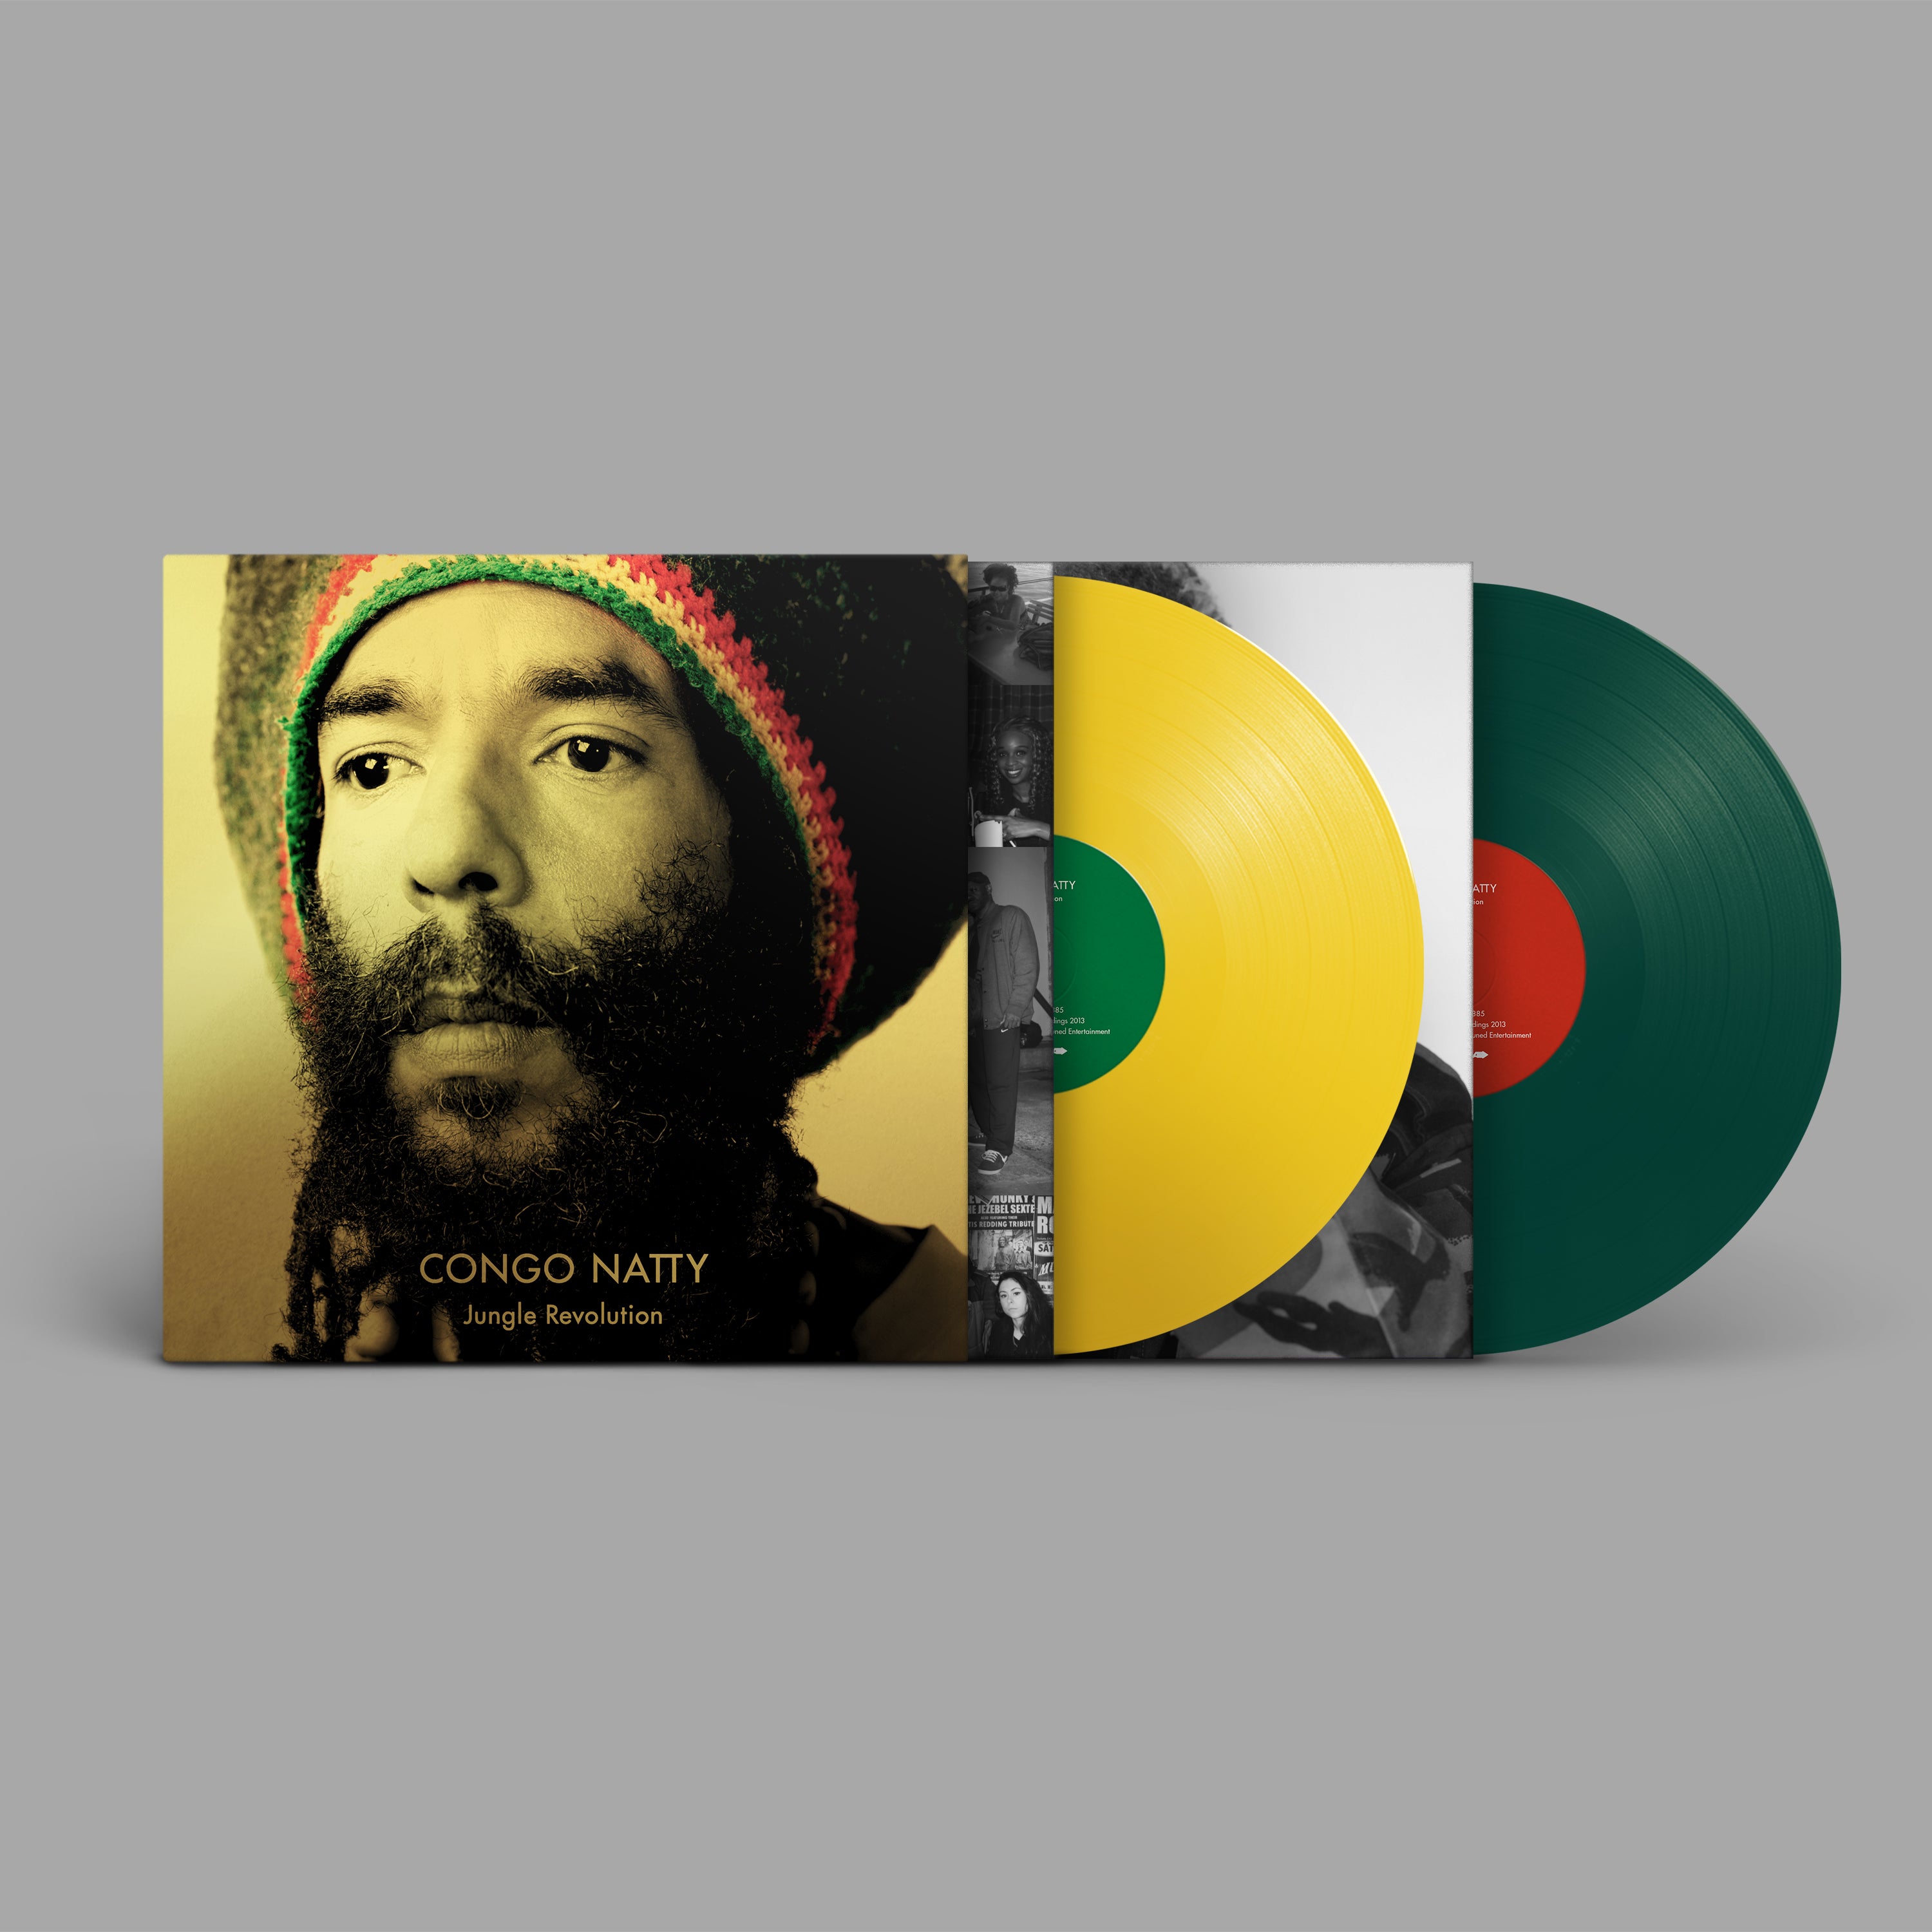 Congo Natty - Jungle Revolution (10th Anniversary): Yellow and Green Vinyl LP